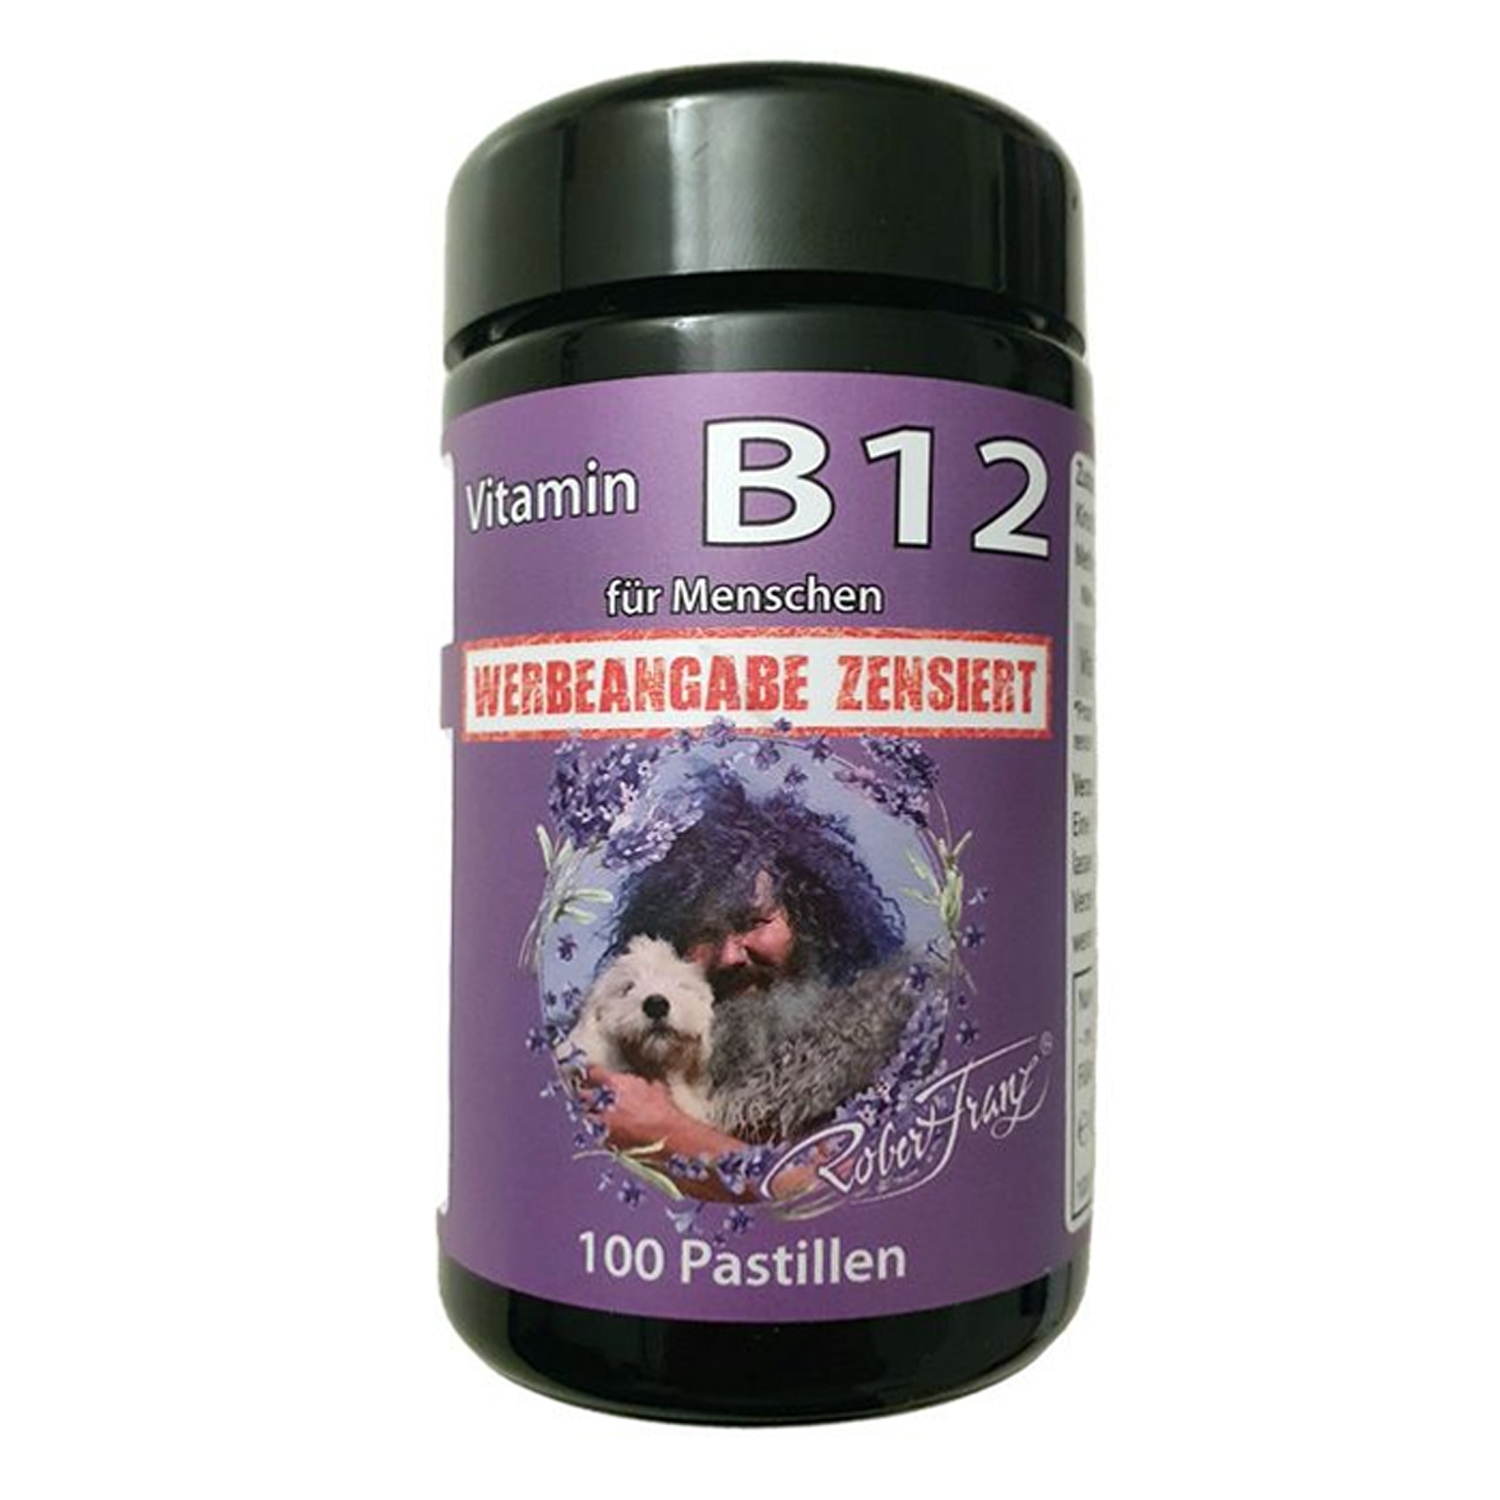 Vitamin B12 by Robert Franz